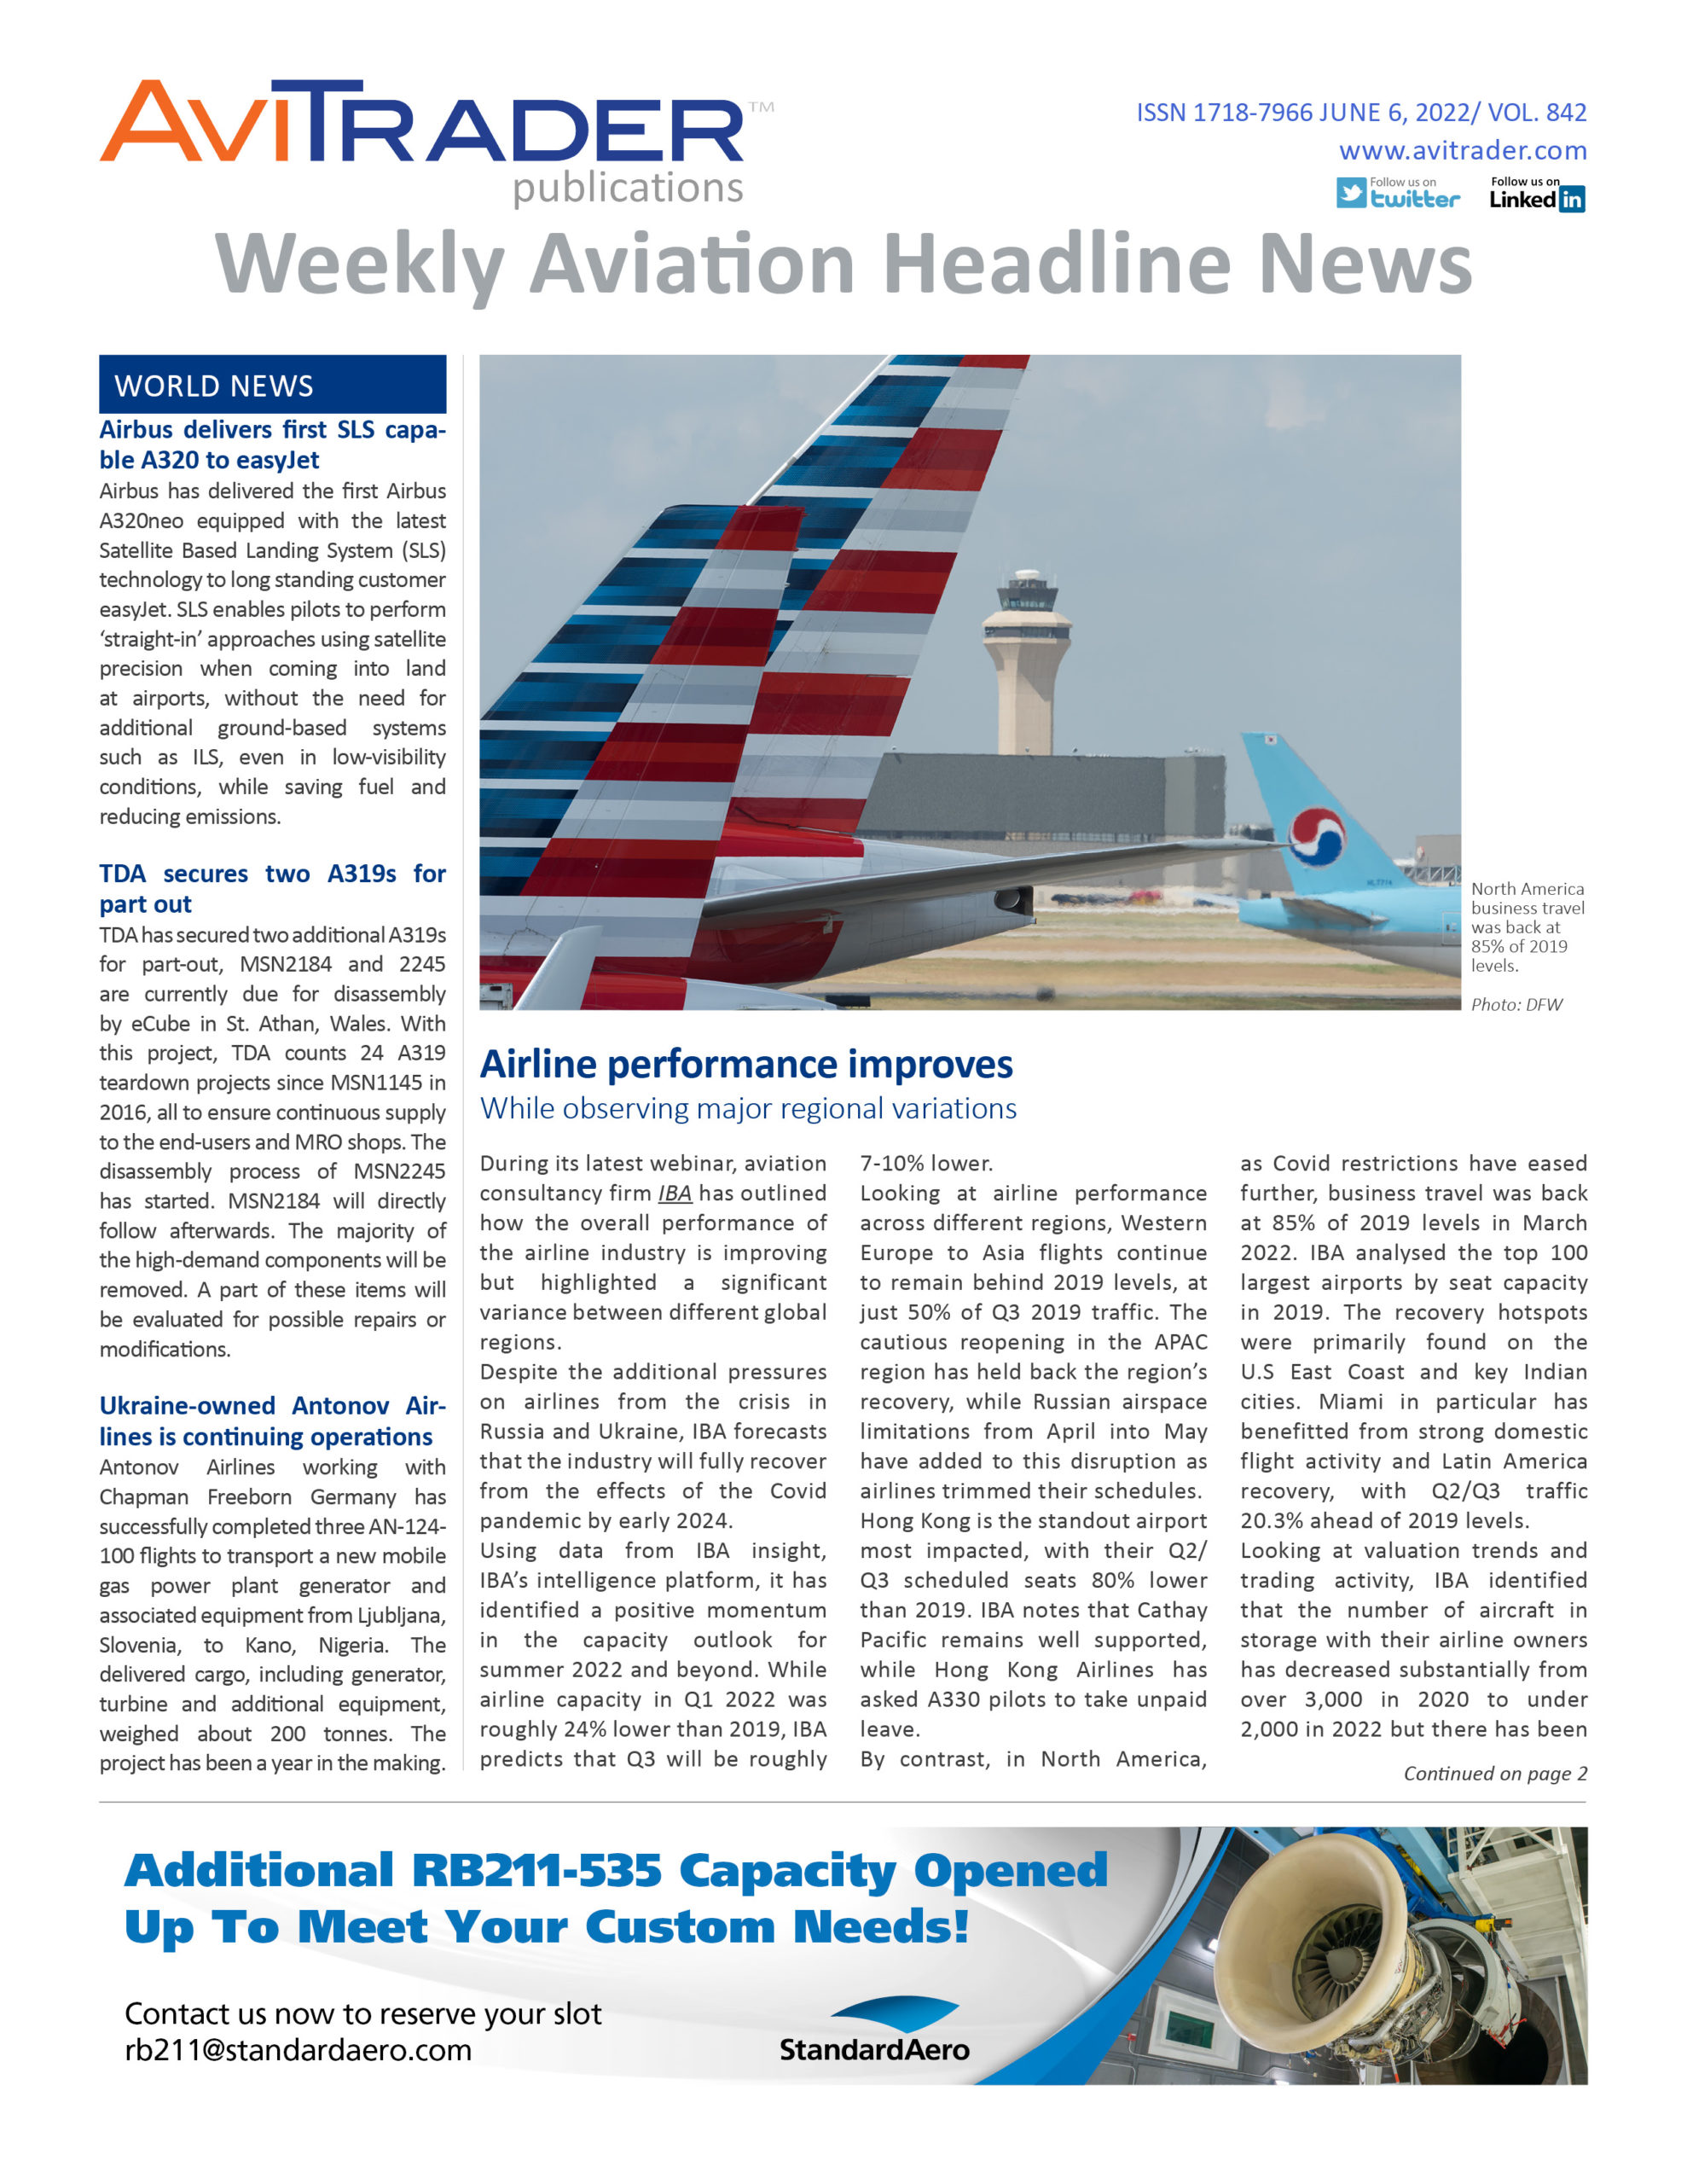 AviTrader_Weekly_Headline_News_Cover_2022-06-06